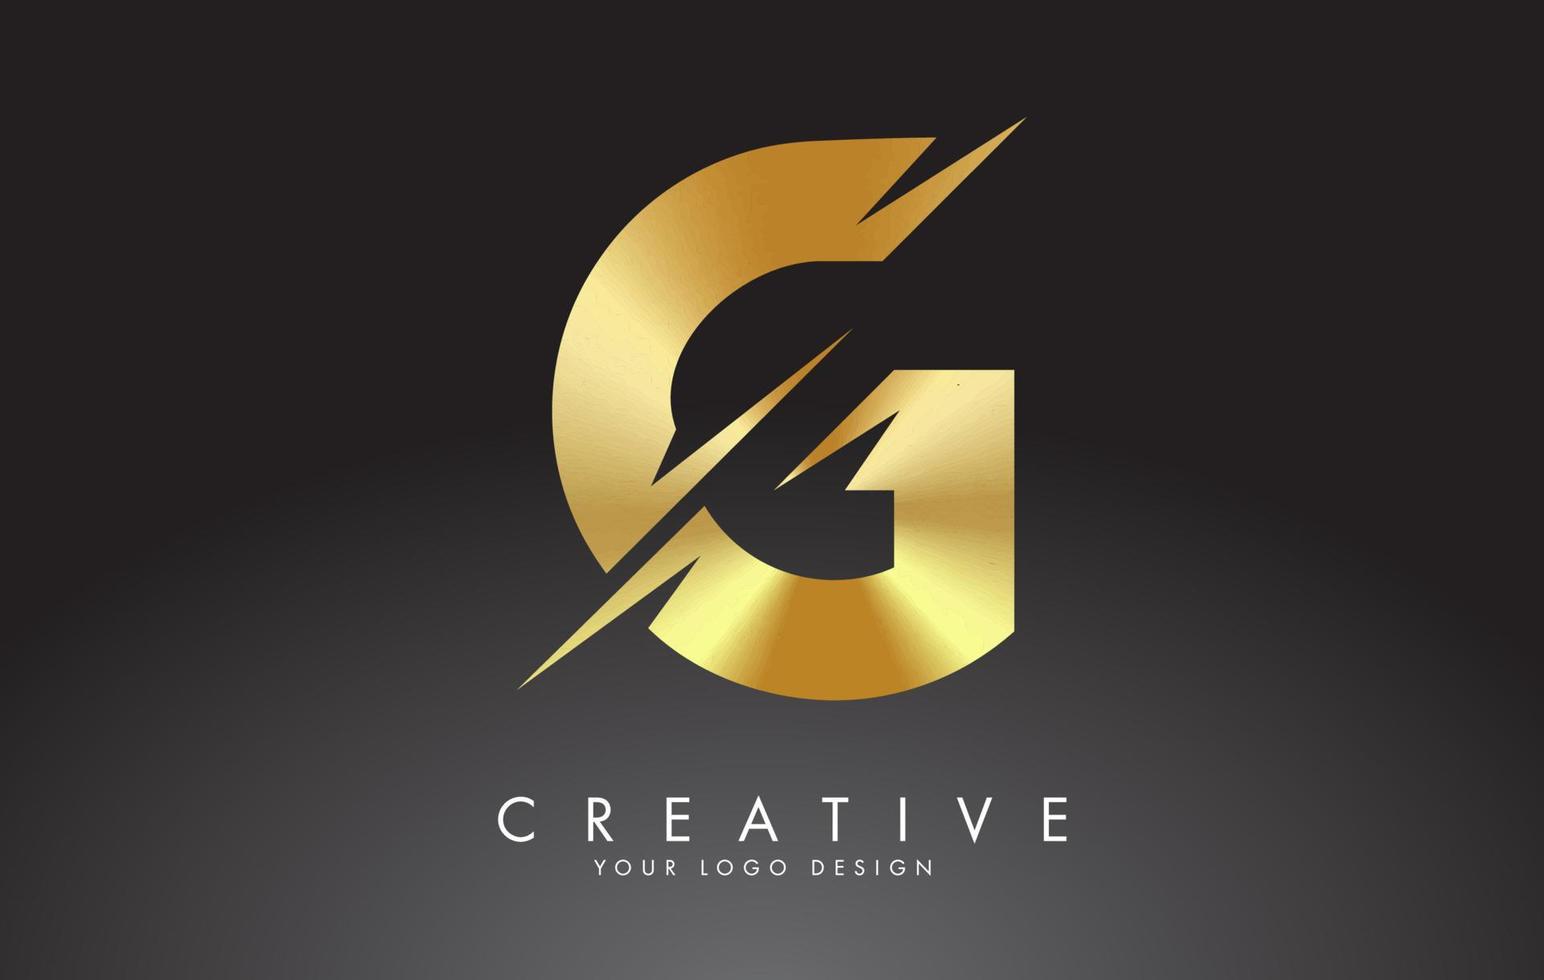 Diseño de logotipo de letra g dorada con cortes creativos. vector